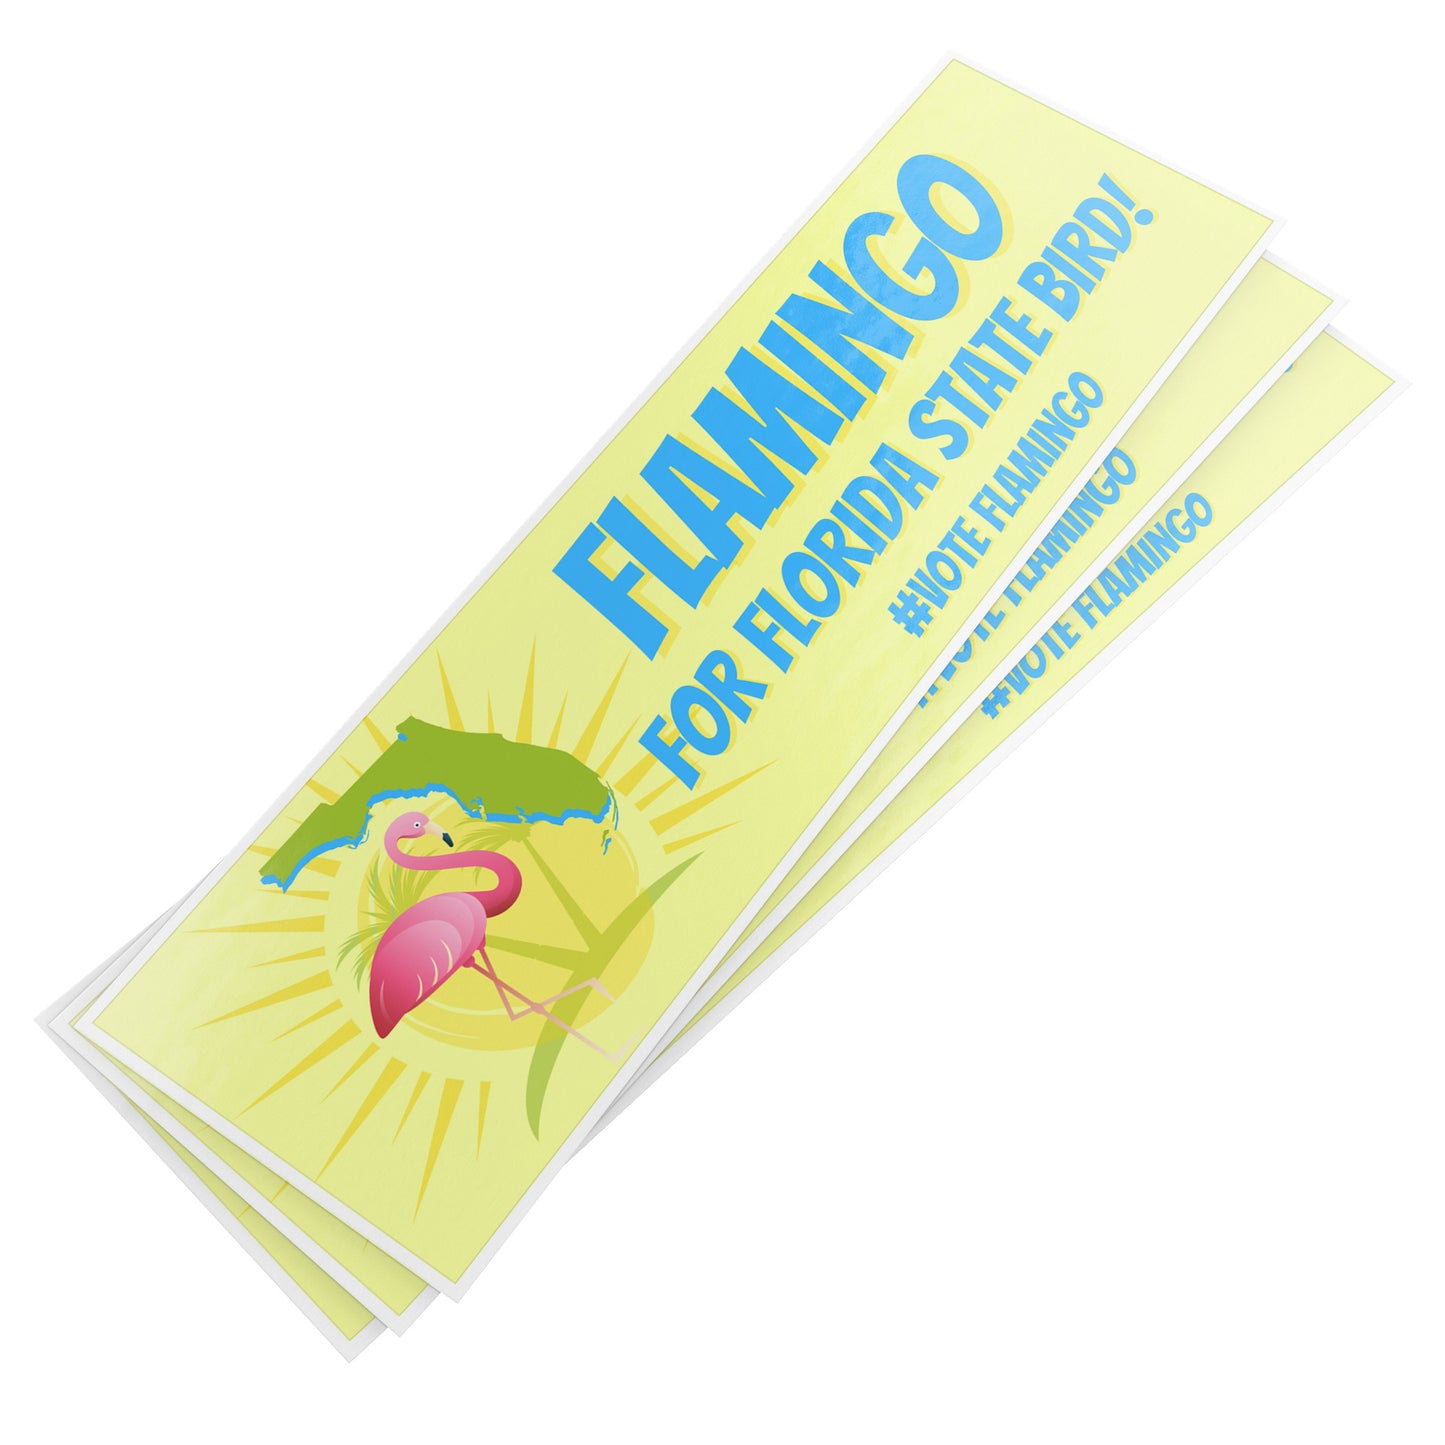 Flamingo For Florida State Bird Bumper Sticker(s)